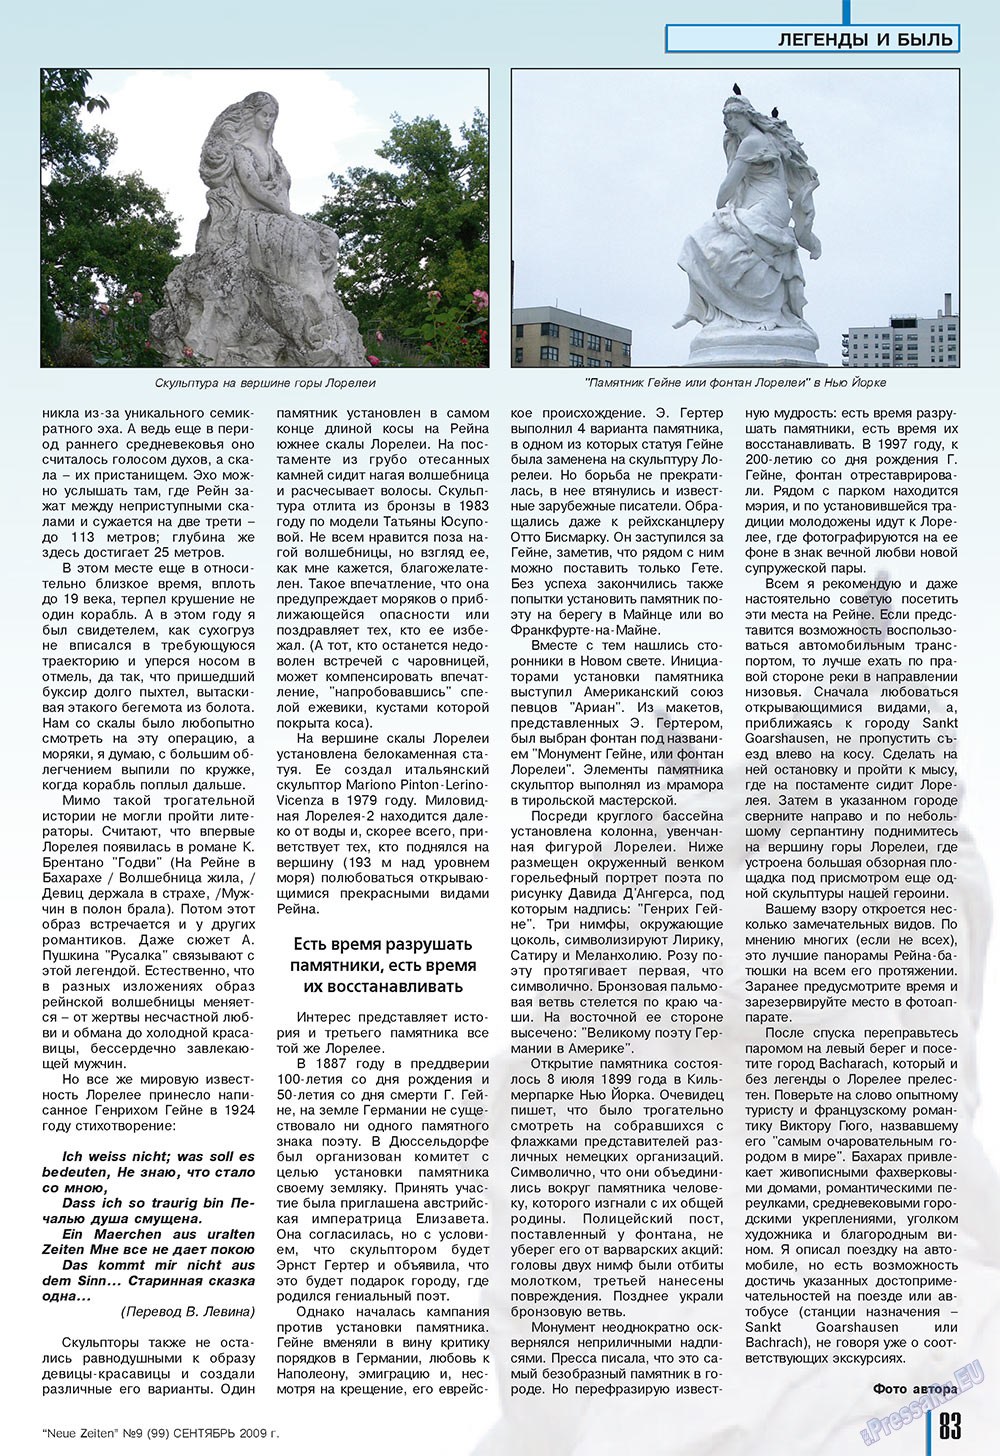 Neue Zeiten (журнал). 2009 год, номер 9, стр. 83